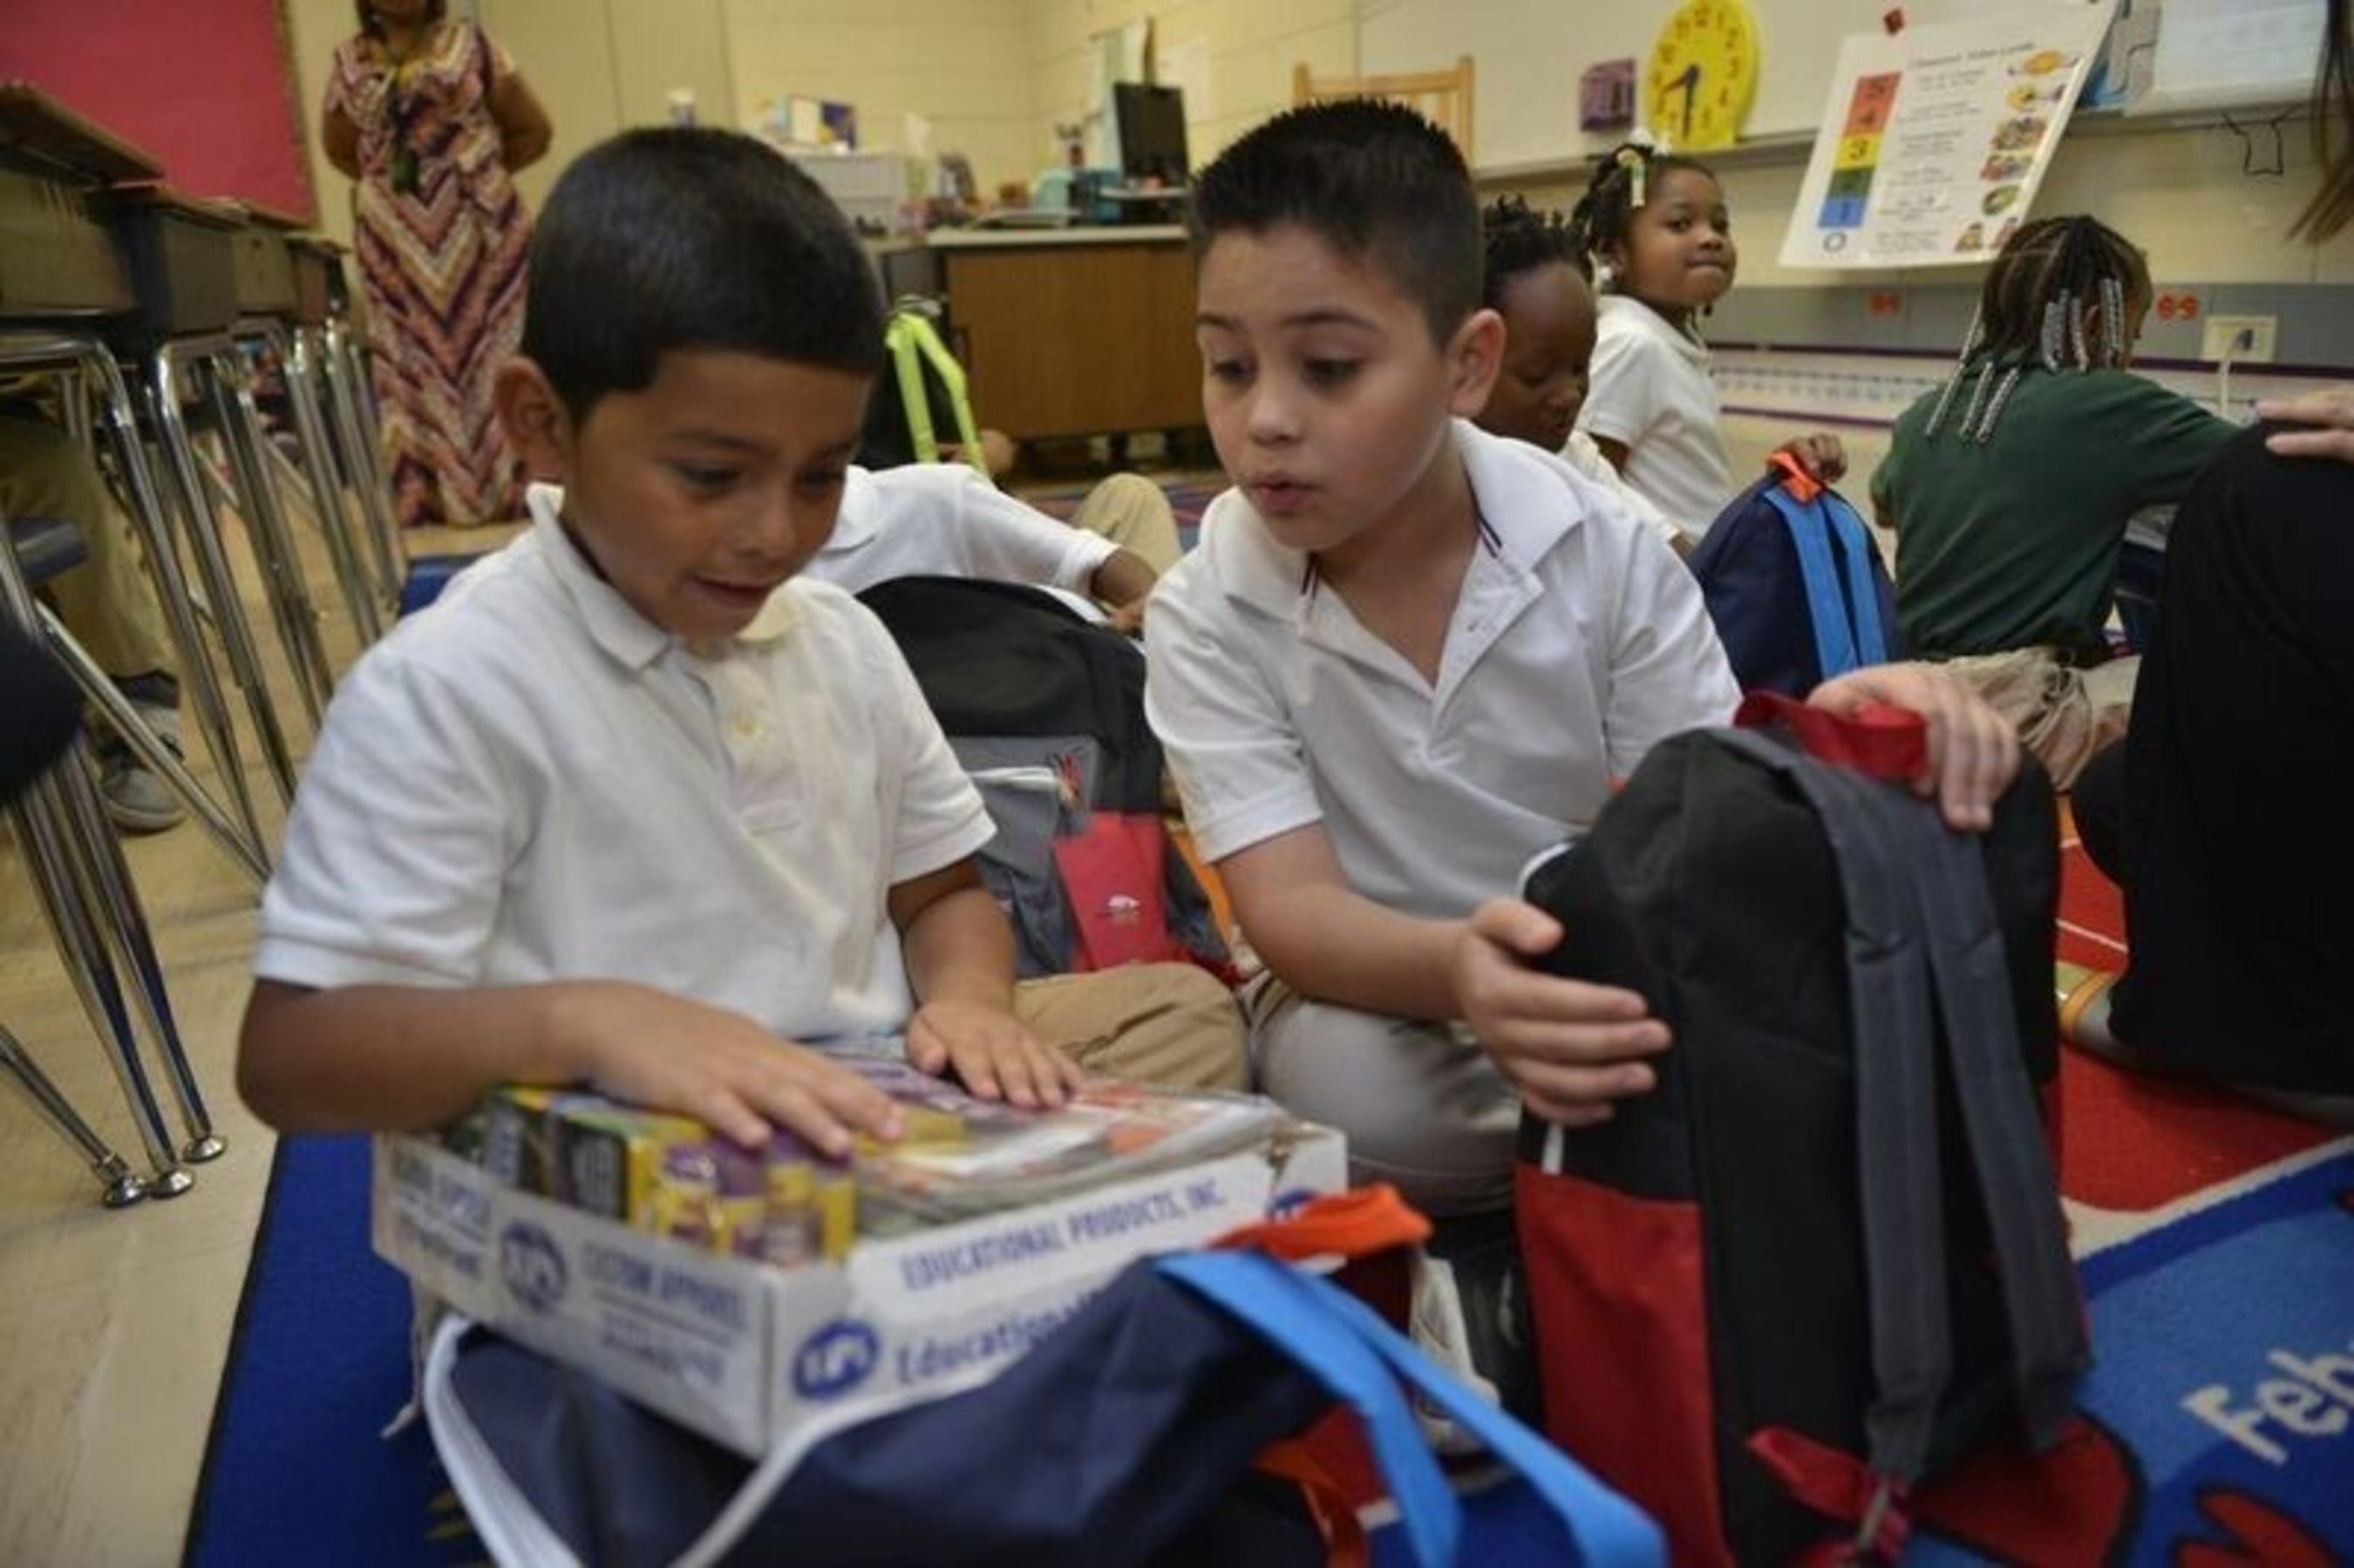 Hidden Valley Elementary children were surprised with school supplies during class.